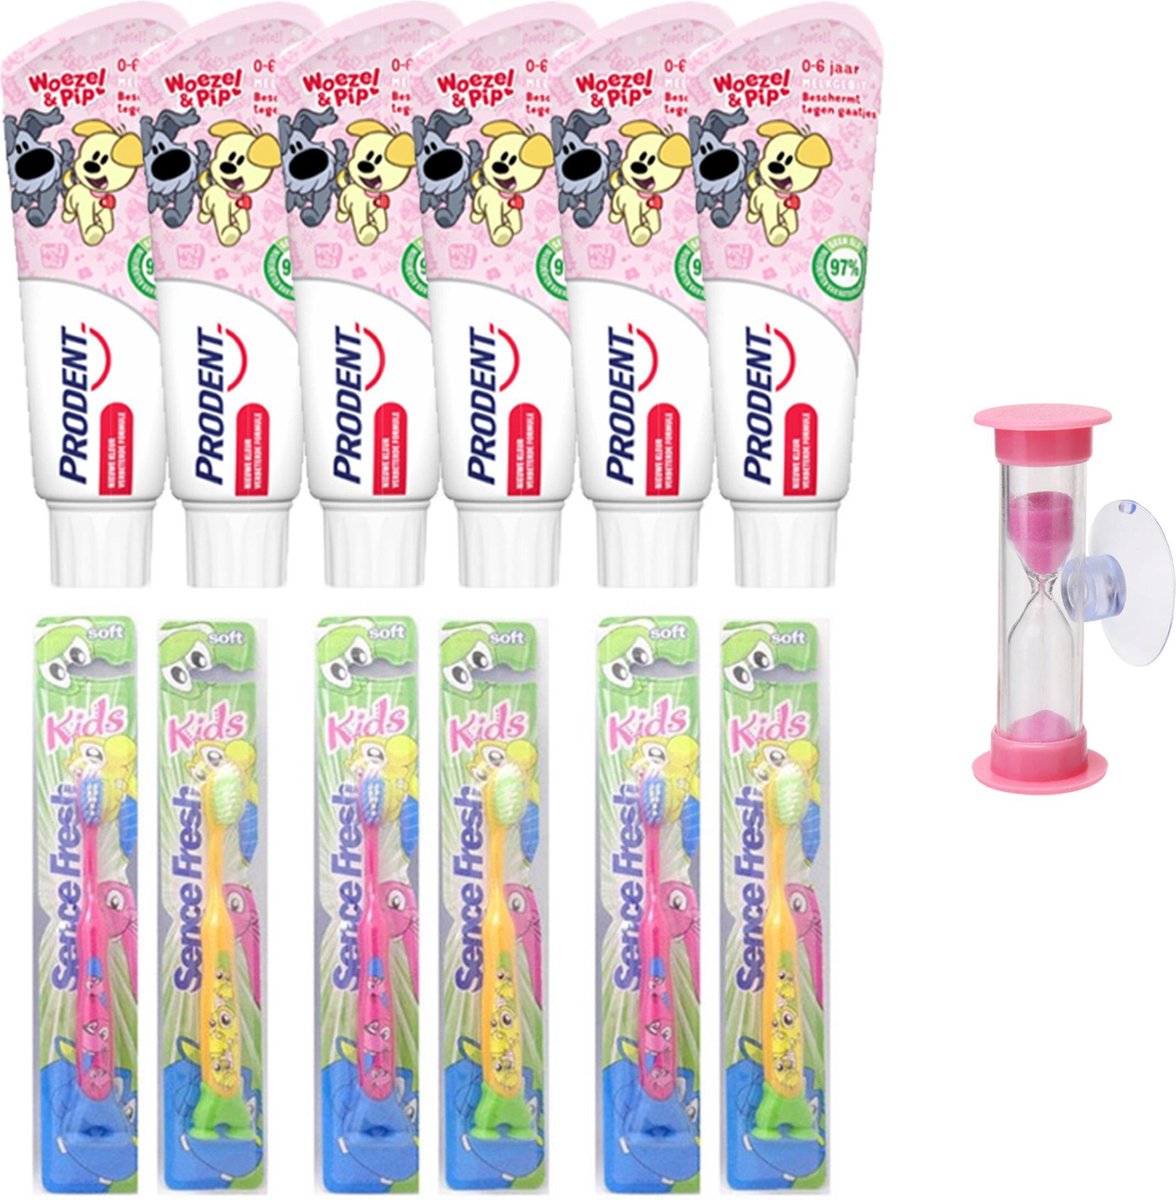 6x Prodent Tandpasta - Woezel & Pip - 6 tandenborstels - geel- roze - met zandloper